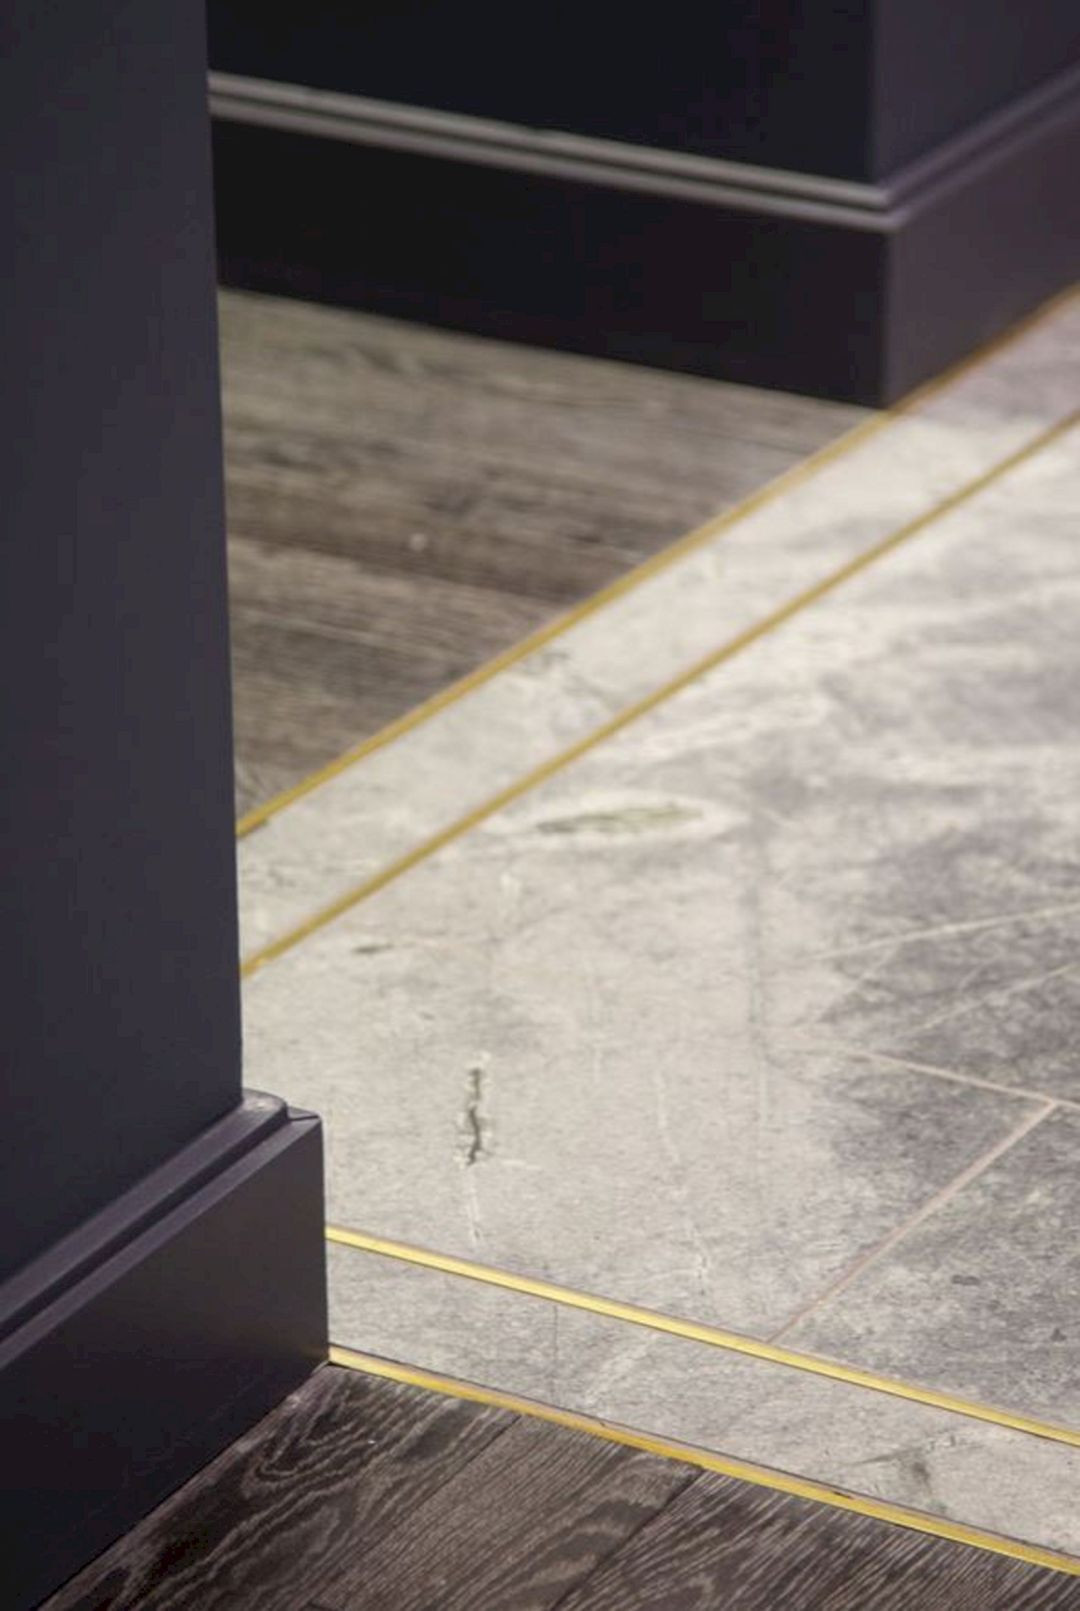 How to Glue Down Hardwood Floor to Concrete Of Pin by Amanda Watson On Interior Ideas Inspiration Pinterest In Concrete Wood Floor Stone Flooring Foyer Flooring Metal Floor Metal Trim